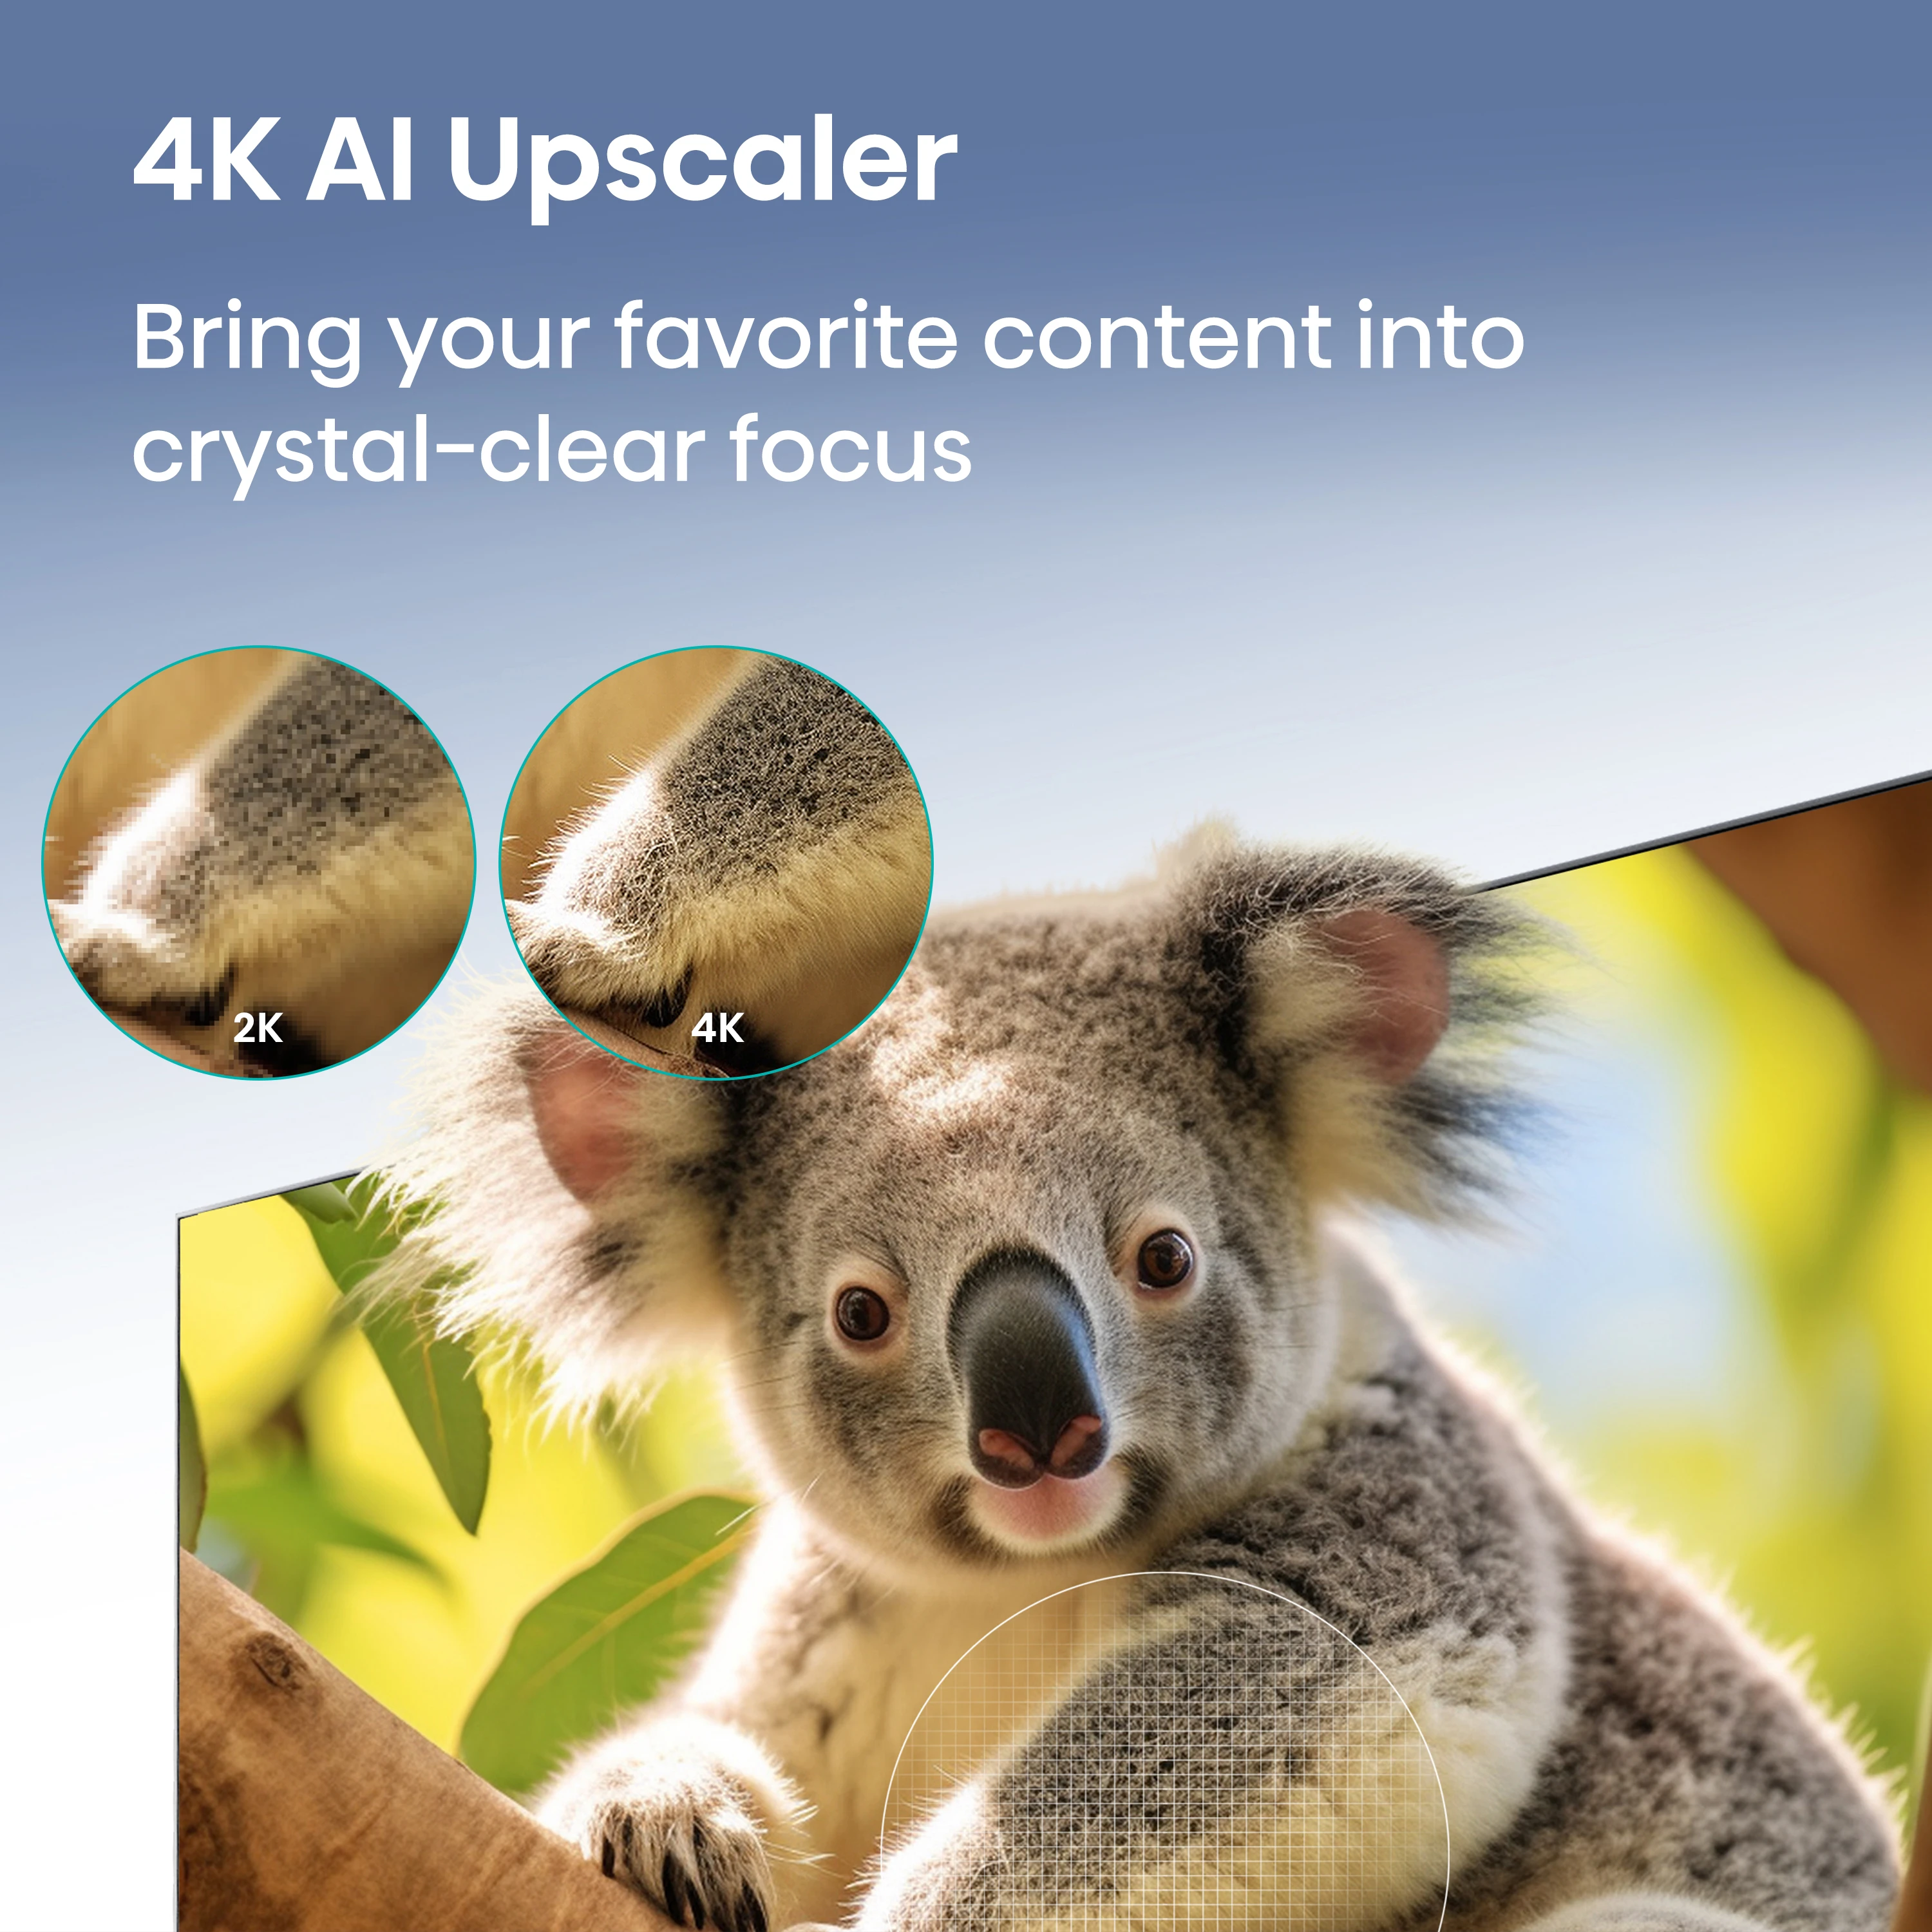 4K AI Upscaler.jpg